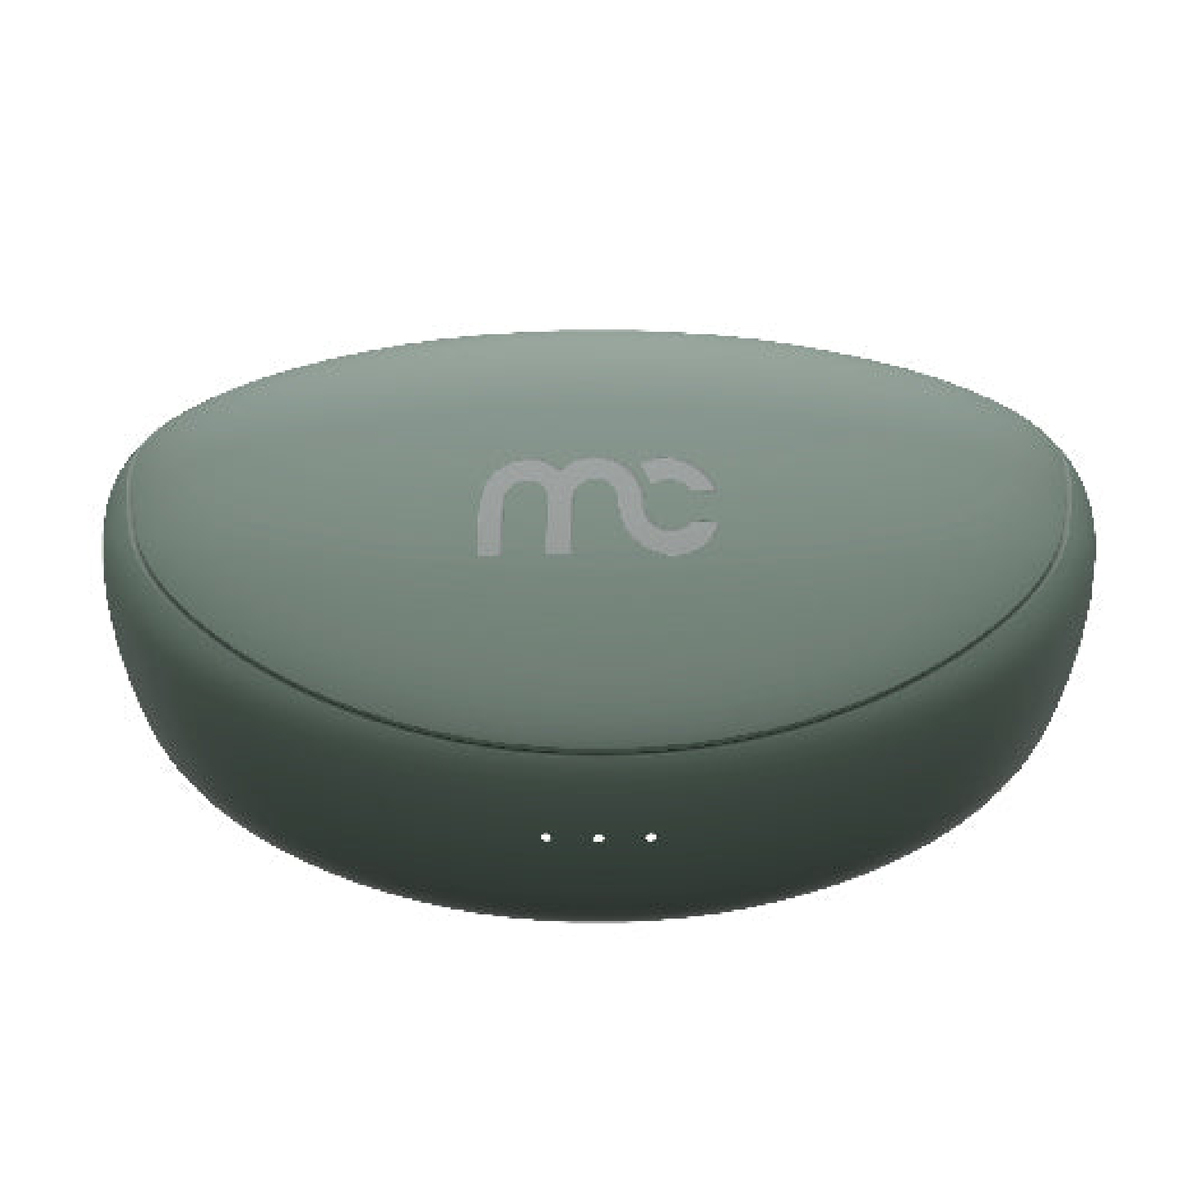 MyCandy True Wireless  Earbuds TWS300 Green